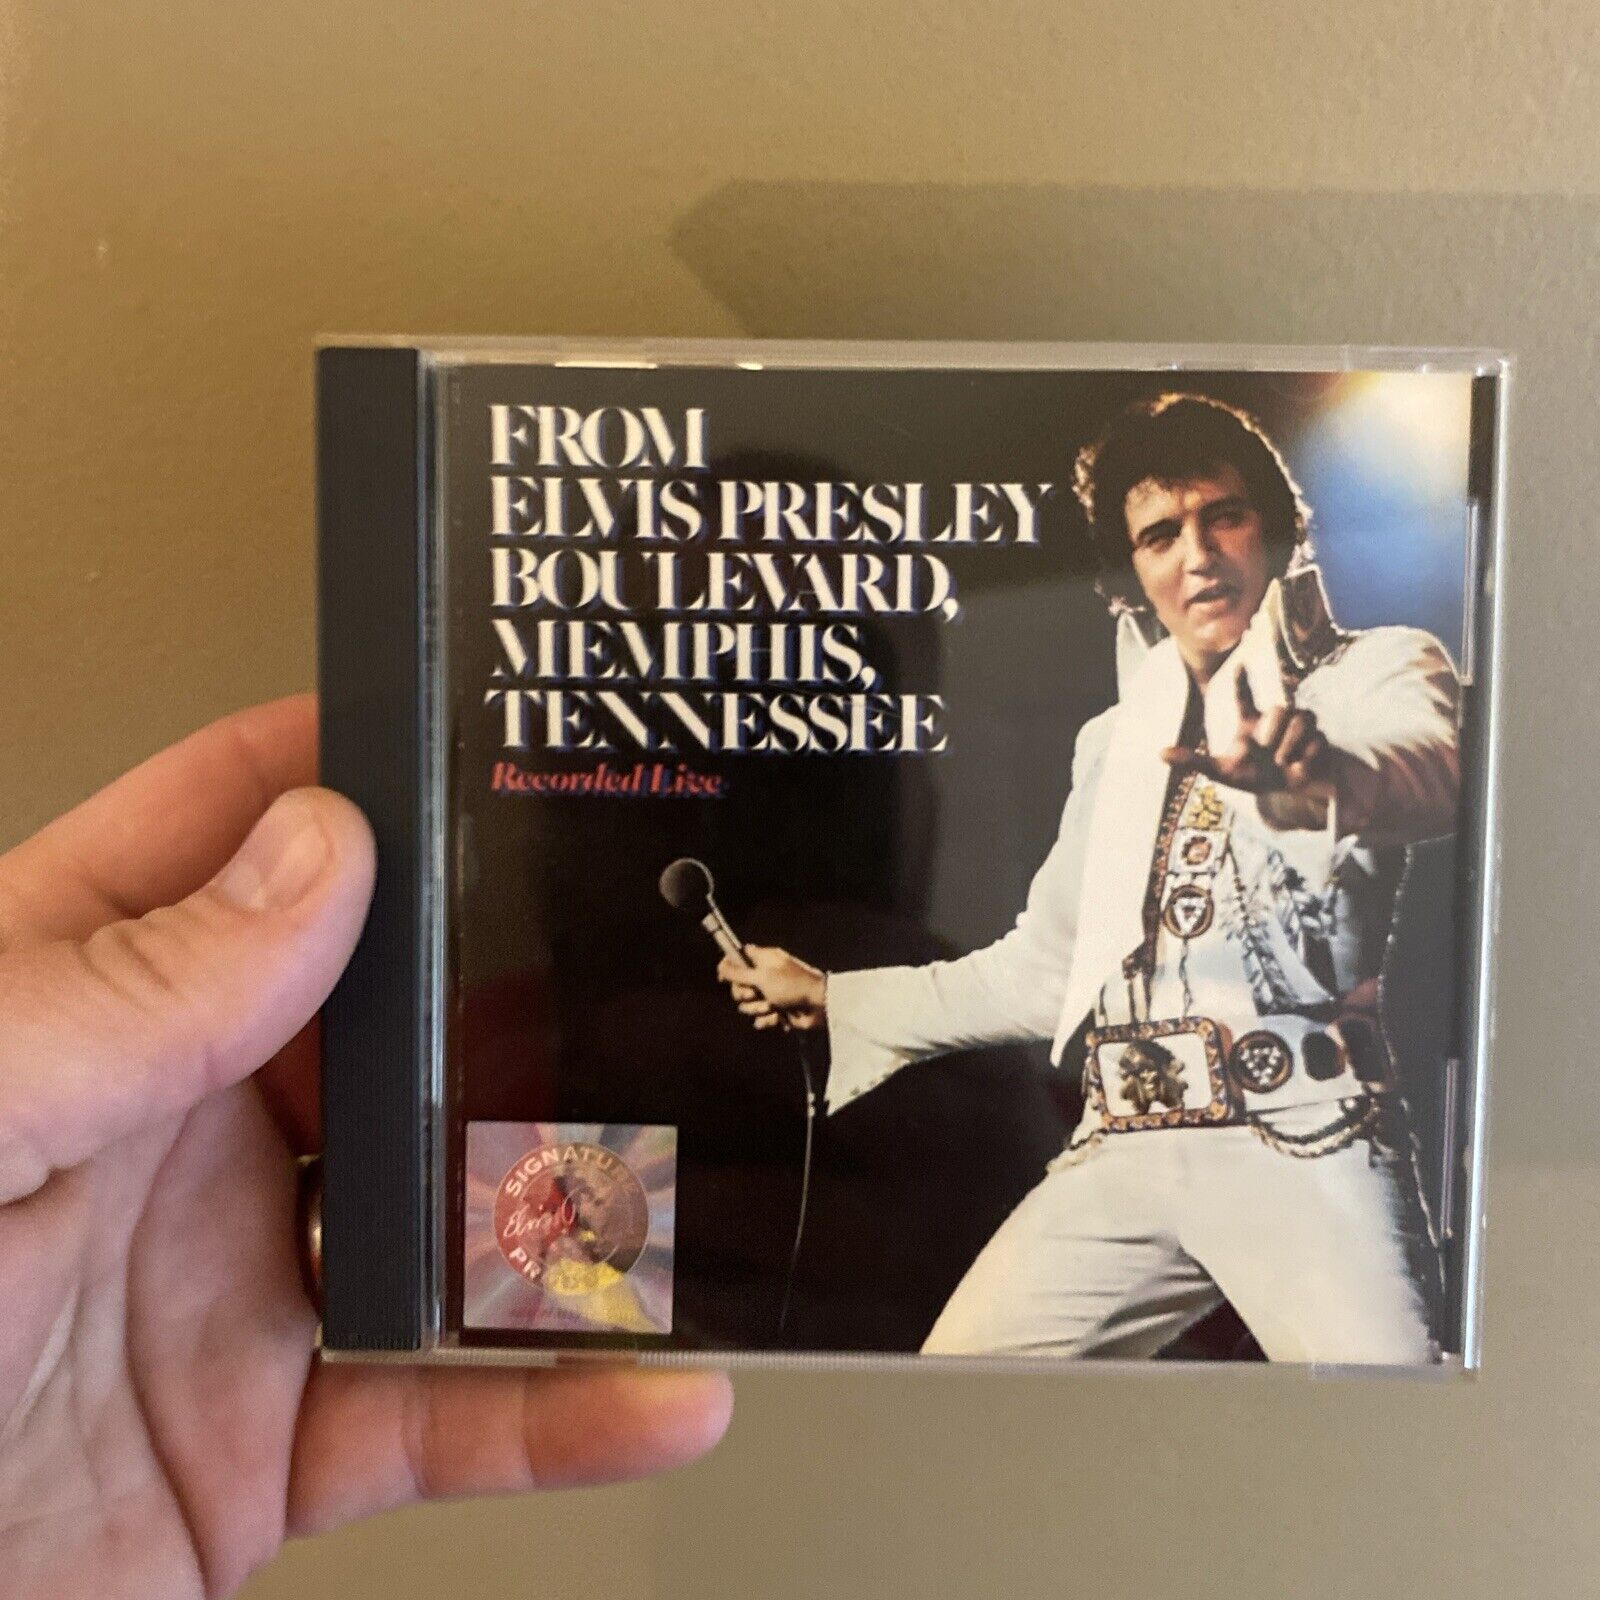 From Elvis Presley Boulevard, Memphis, Tennessee (CD, 1988)